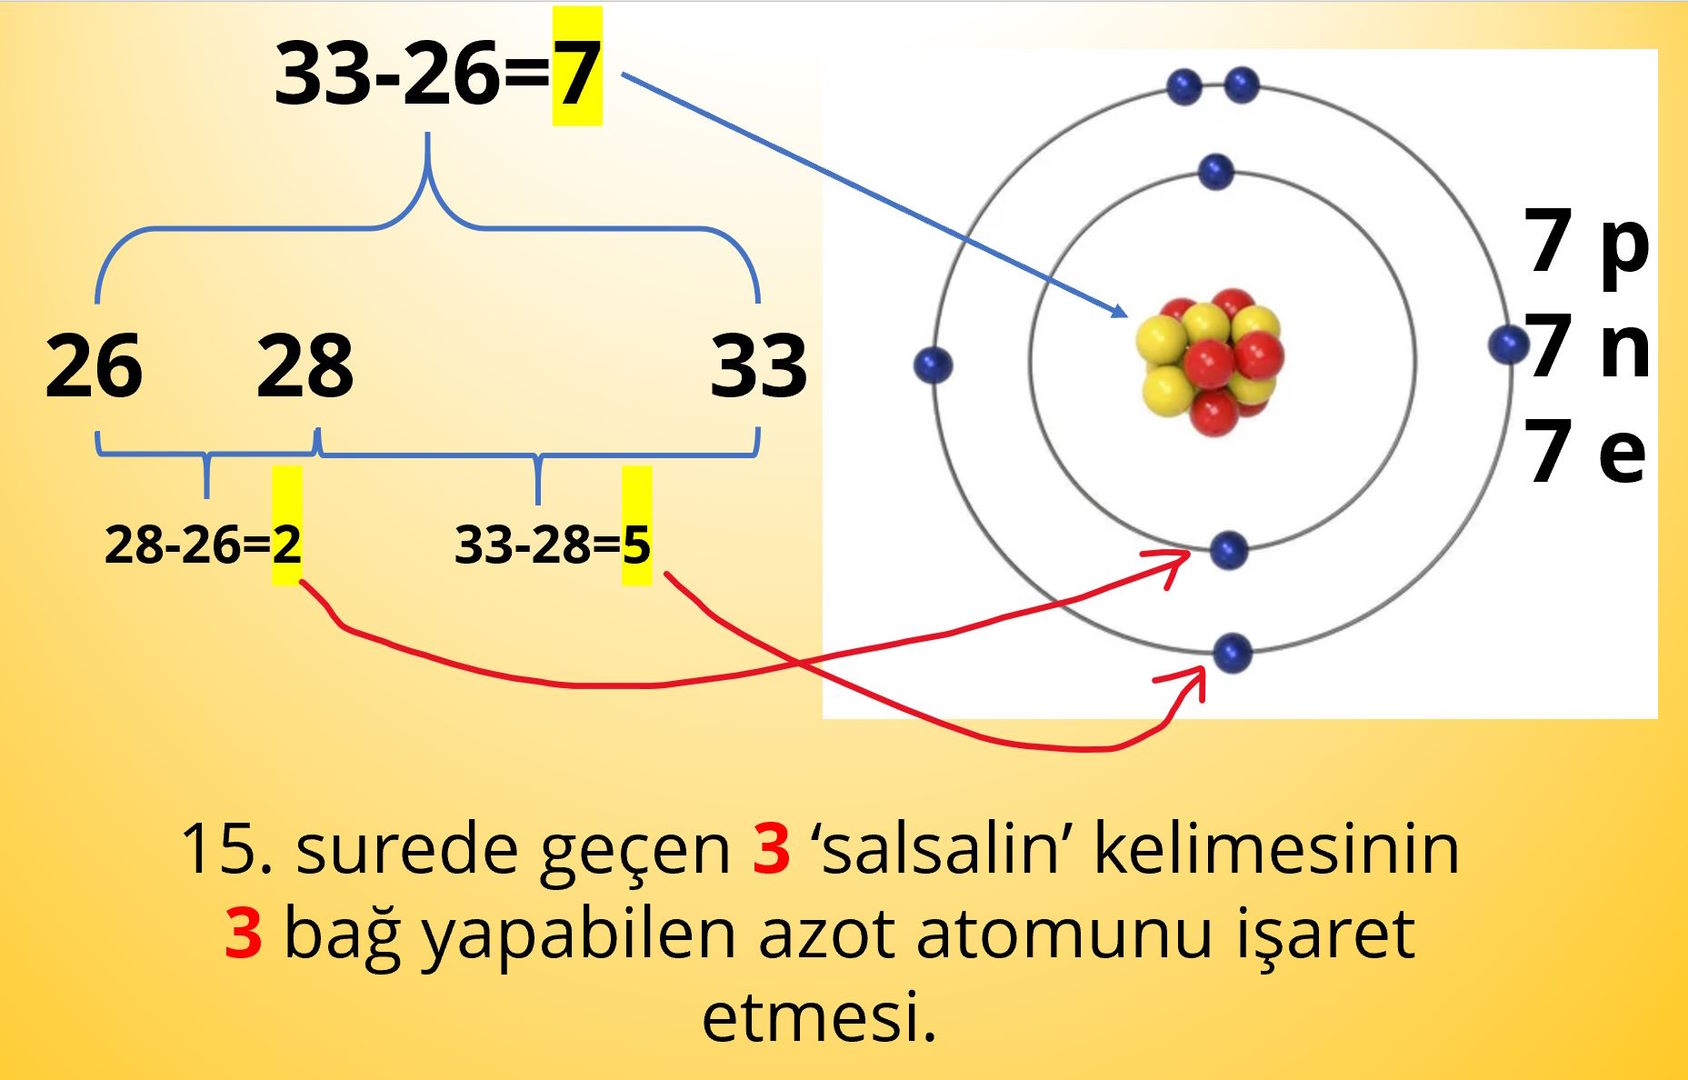 15 sure salsaline gecisi molekuller azot atomu